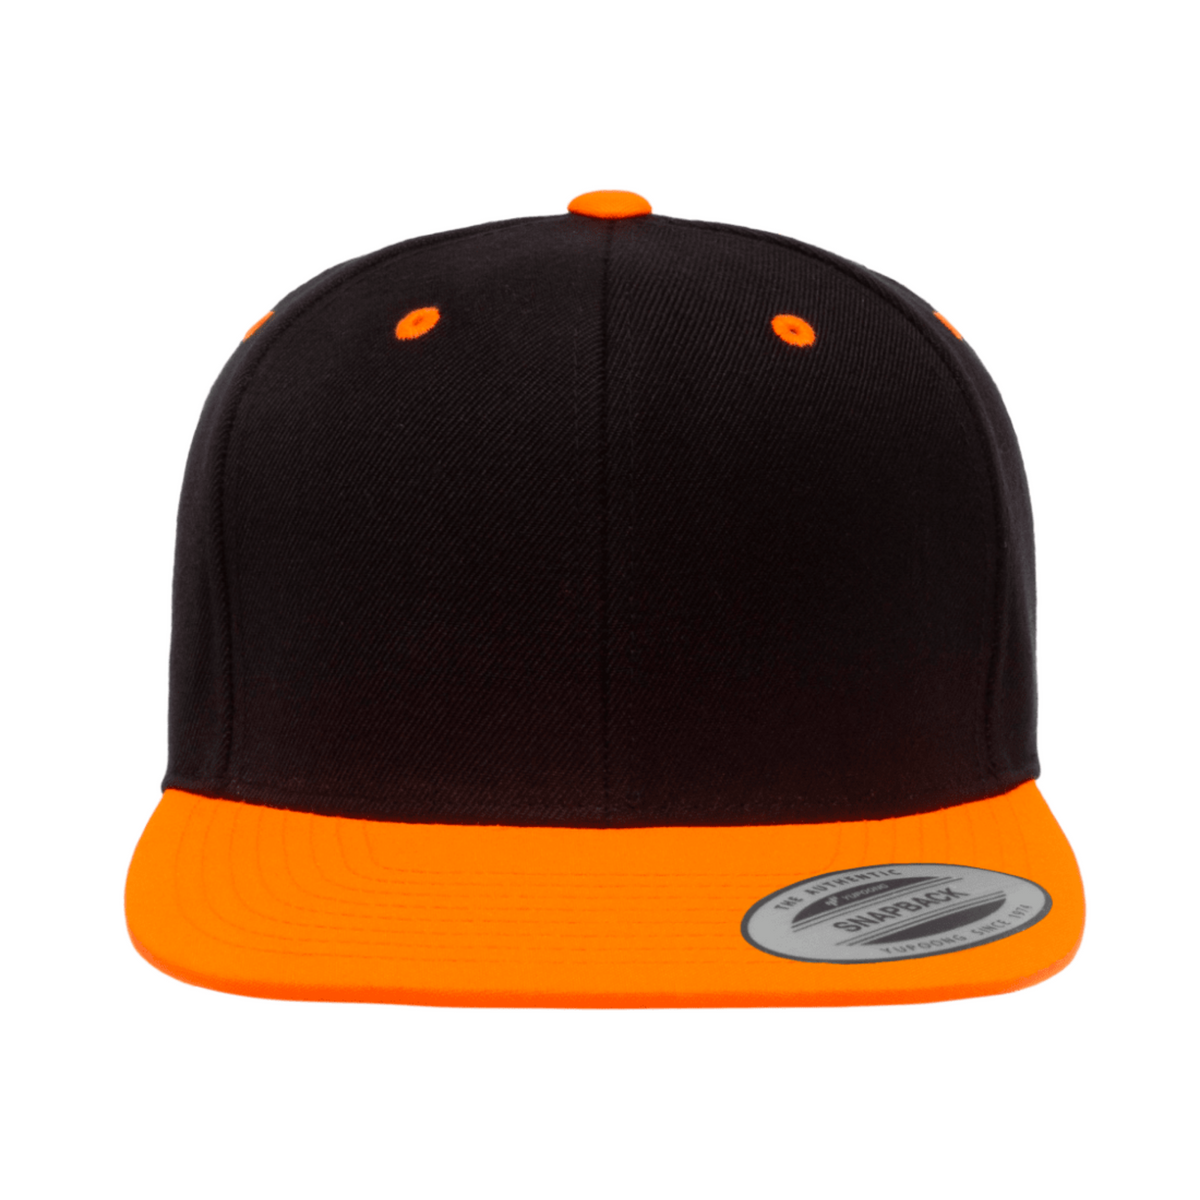 Lyte – Orange Neon Flexfit with Brim Clothing Classic Yupoong Hat Black Up Snapback